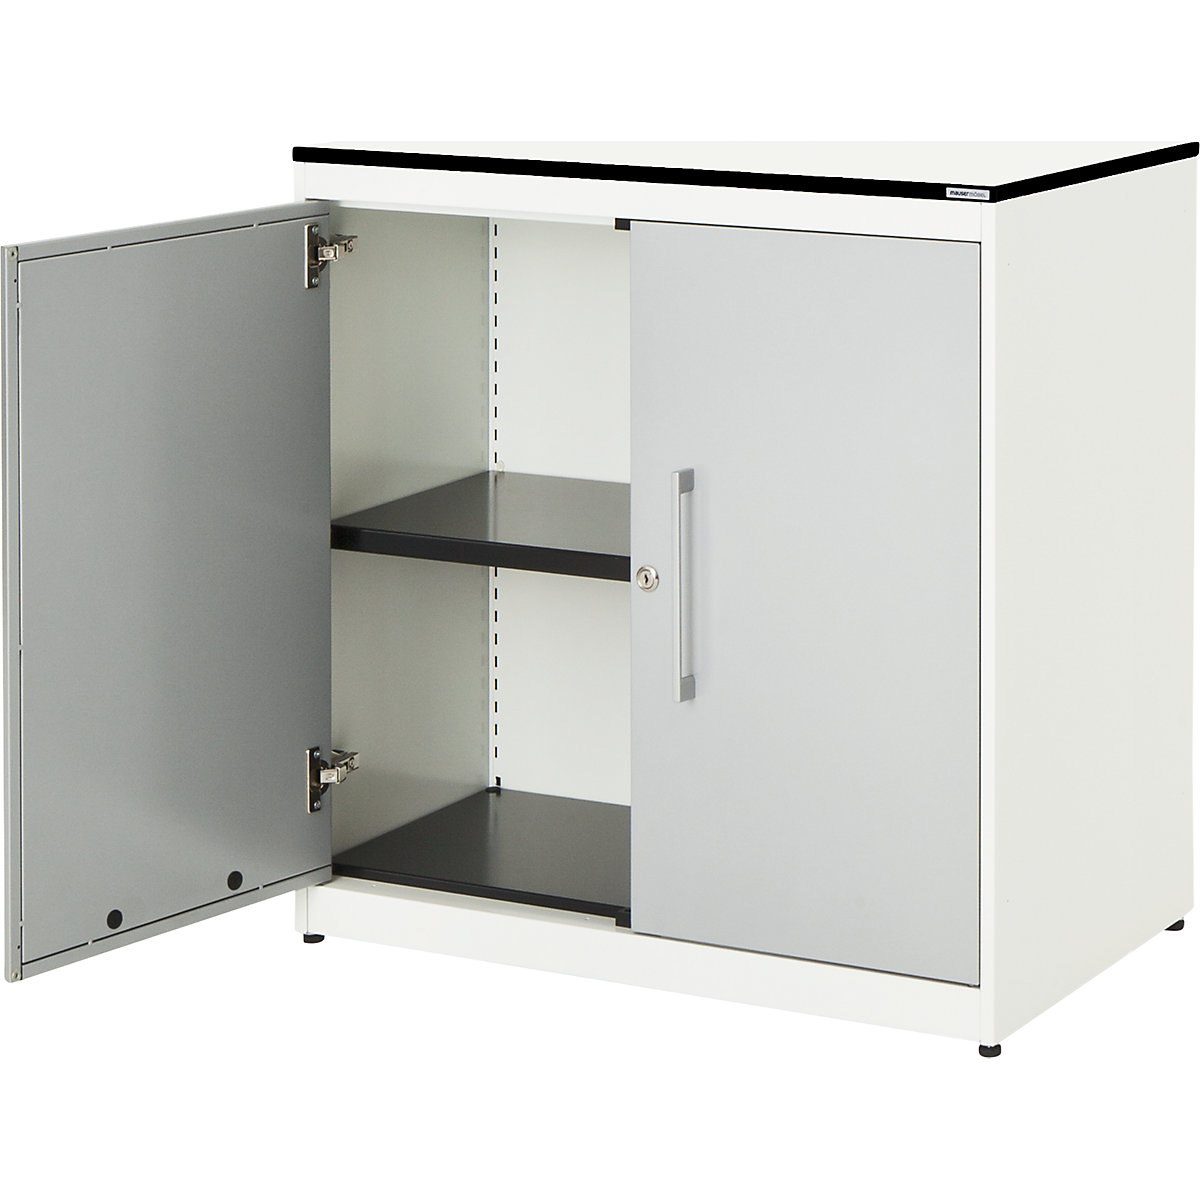 mauser – Dulap cu uși cu canaturi, î. x lăț. 818 x 800 mm, blat HPL cu nucleu plin, 1 poliță, alb pur / alb aluminiu / alb